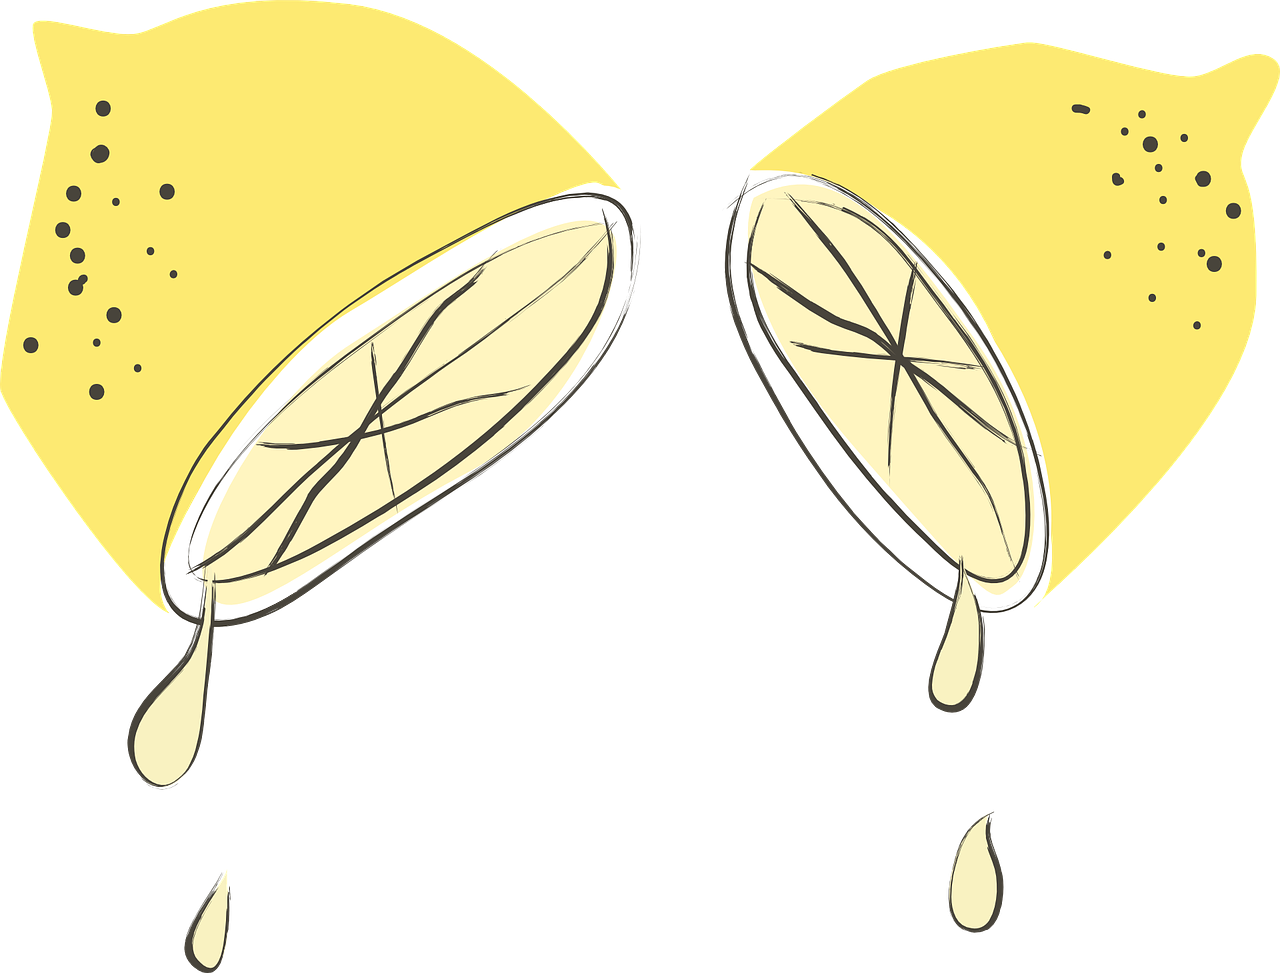 lemons-